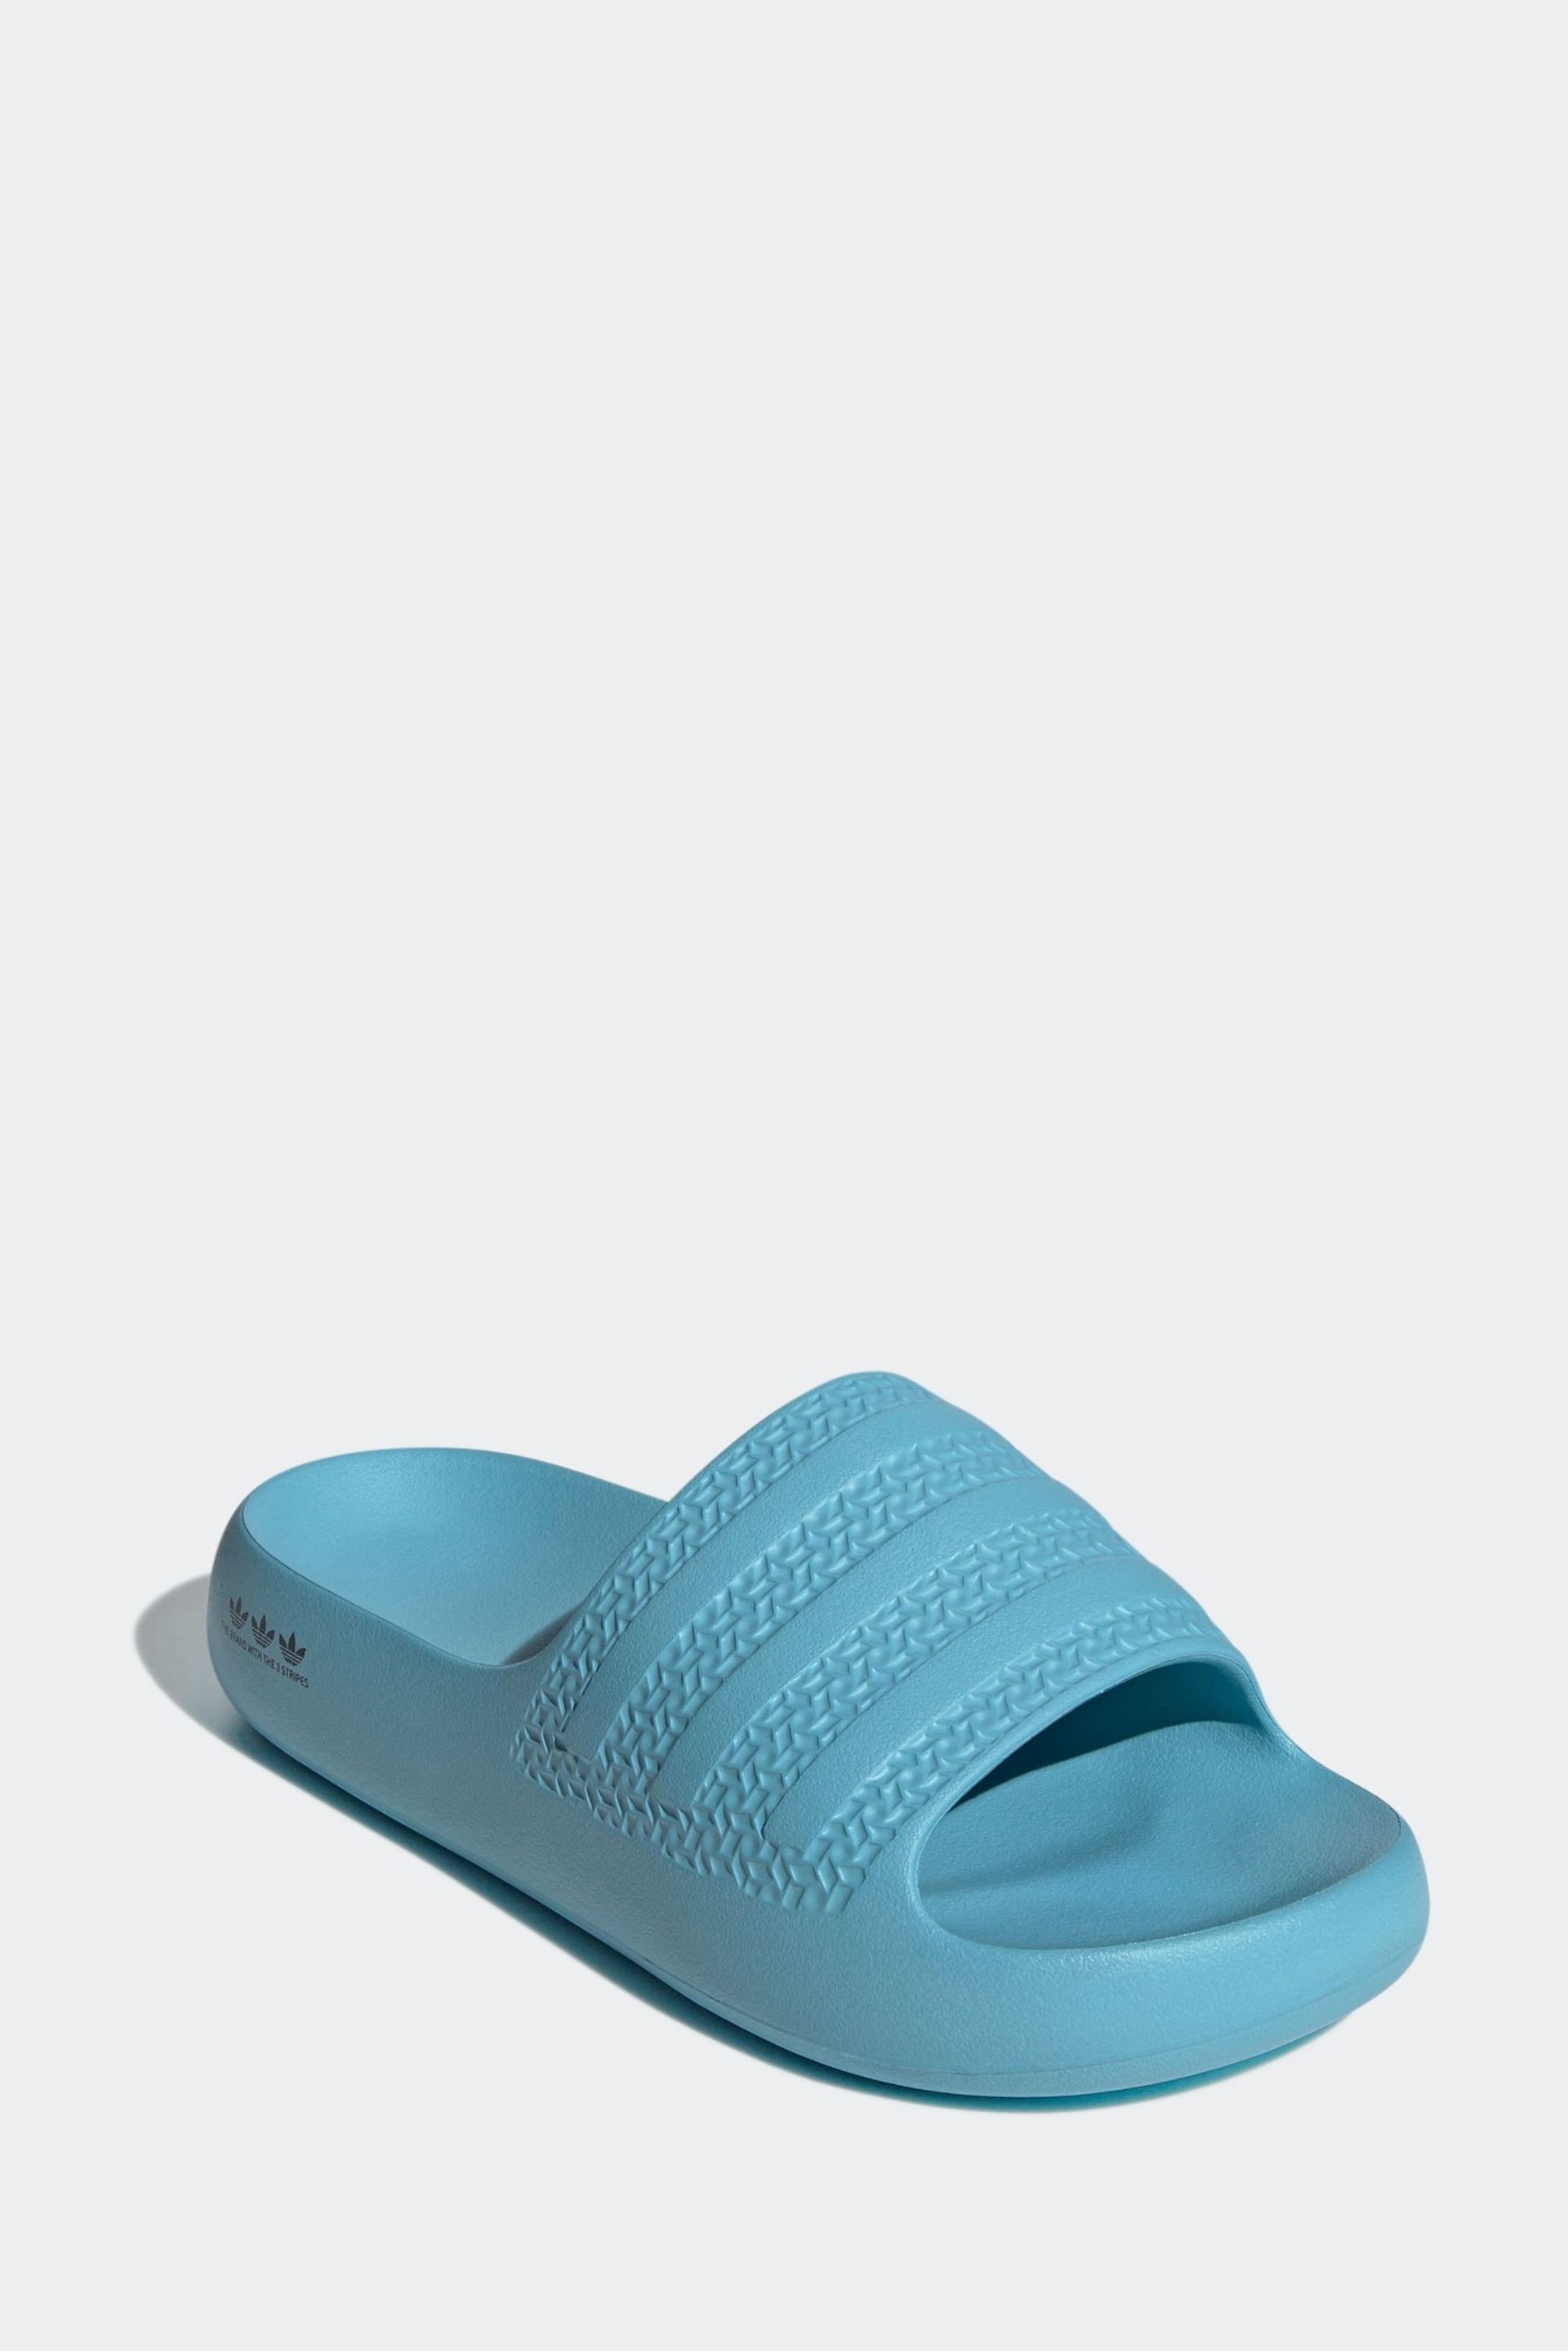 adidas Blue Adilette Ayoon Sandals - Image 3 of 8